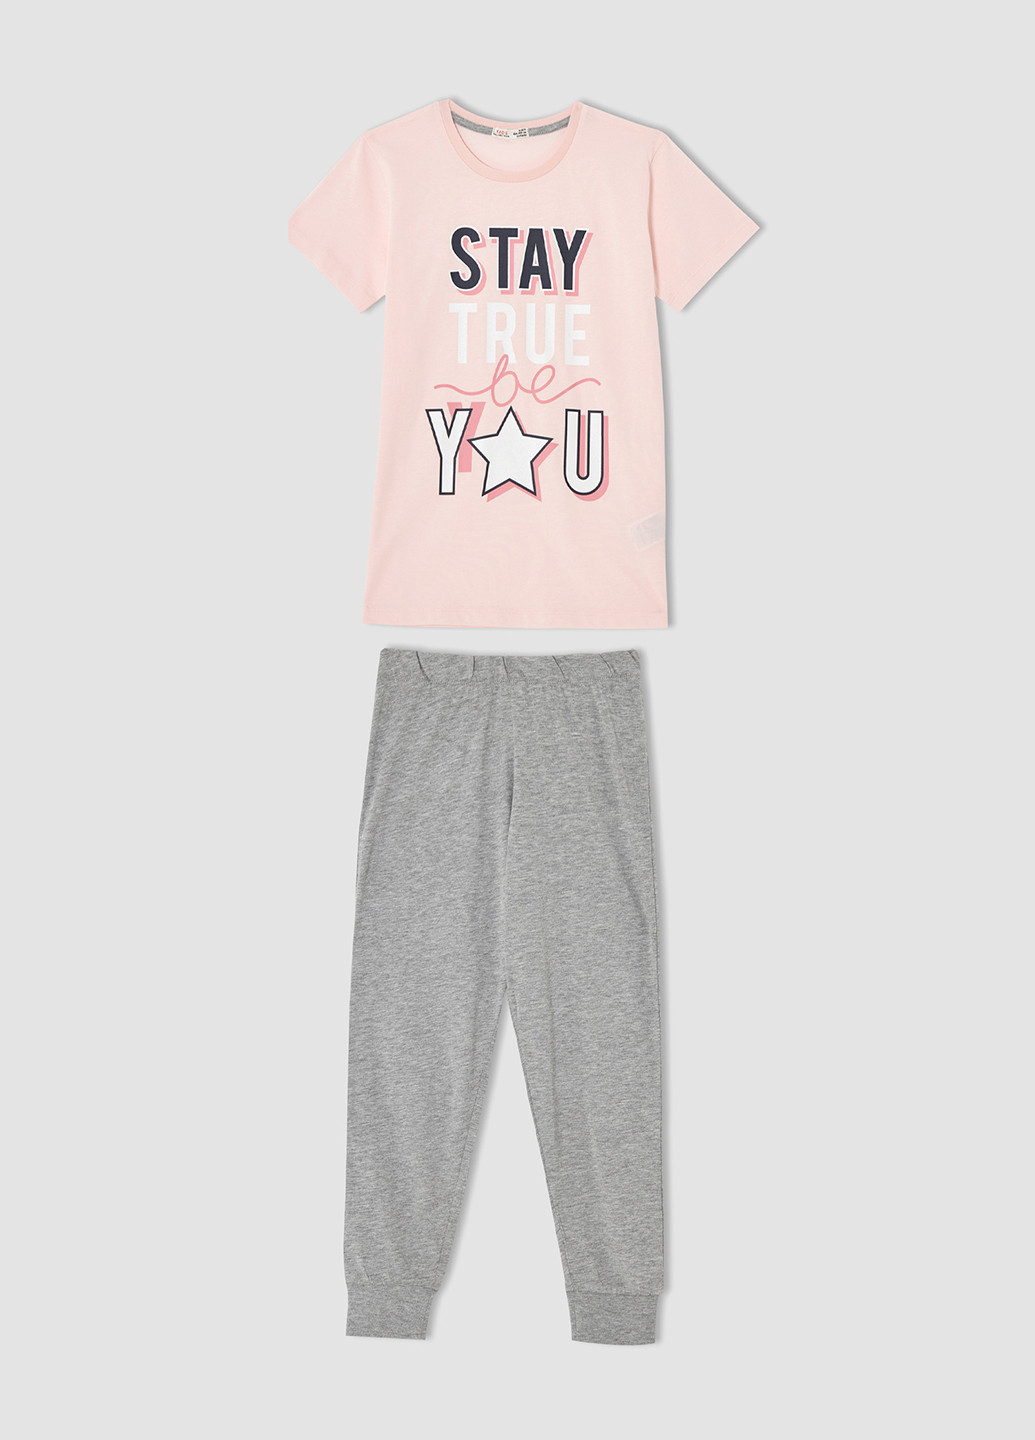 Светло-розовая всесезон пижама (футболка, брюки) футболка + брюки DeFacto